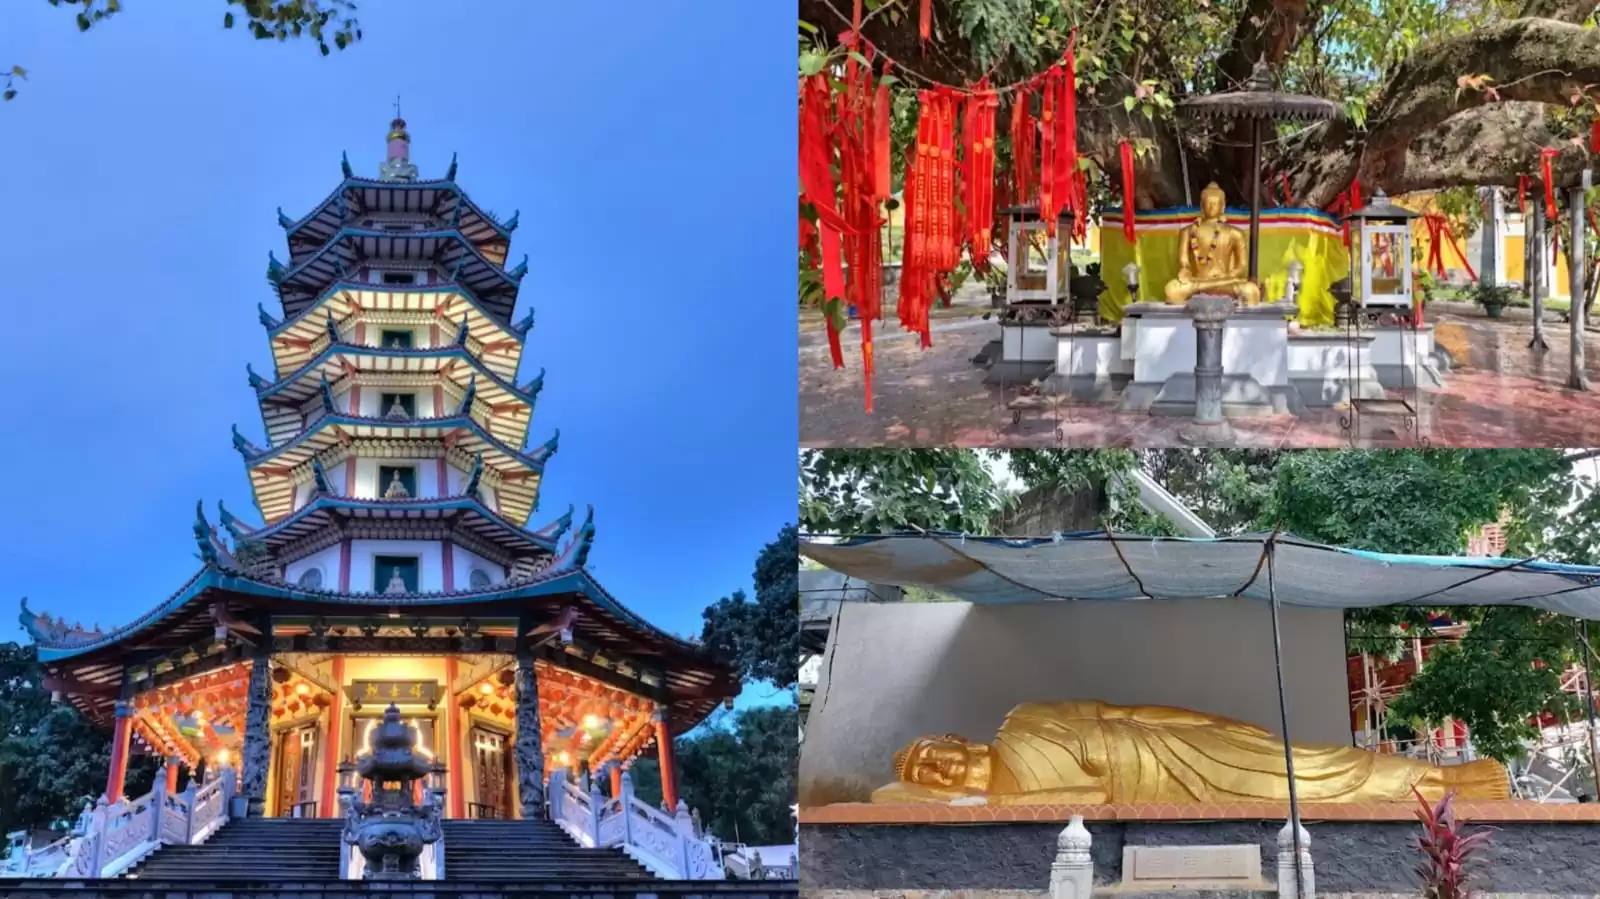 Intip Cantiknya Wisata Religi Pagoda Avalokitesvara, Watu Gong Semarang!